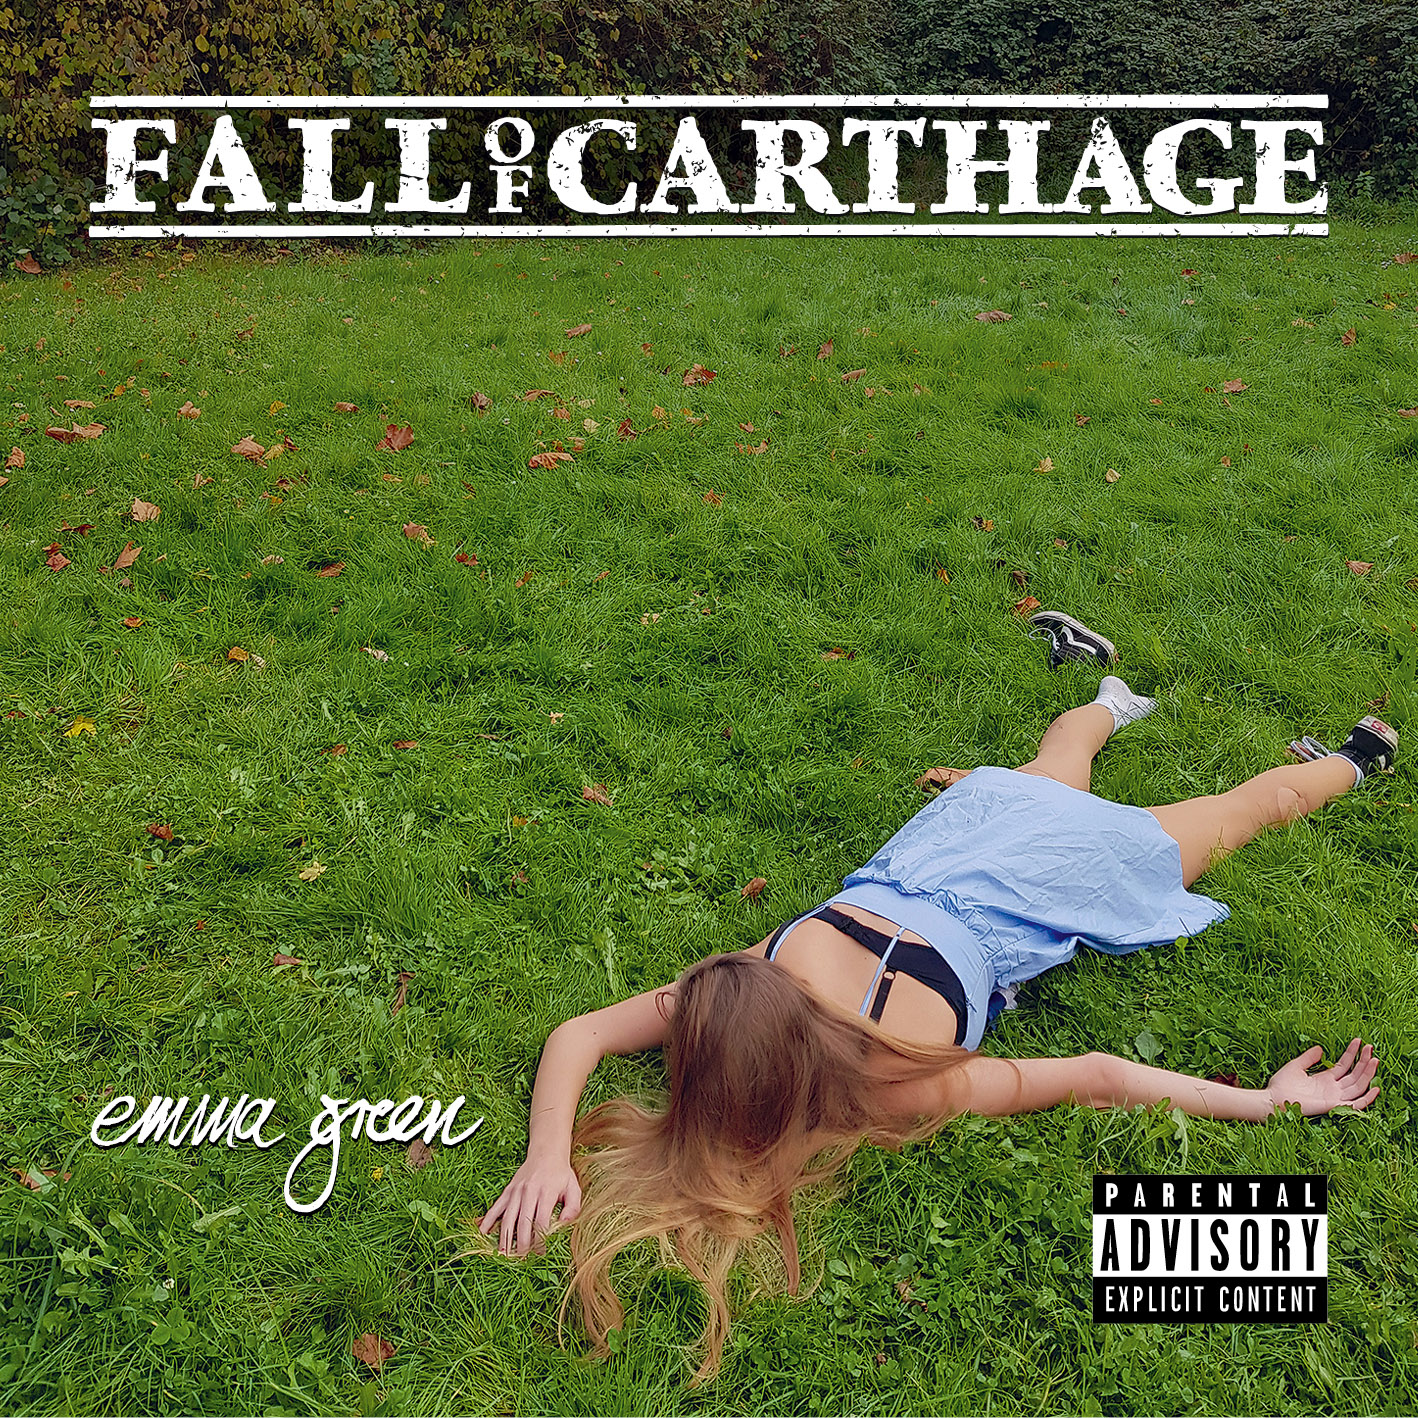 Fall Of Carthage - Emma Green CD